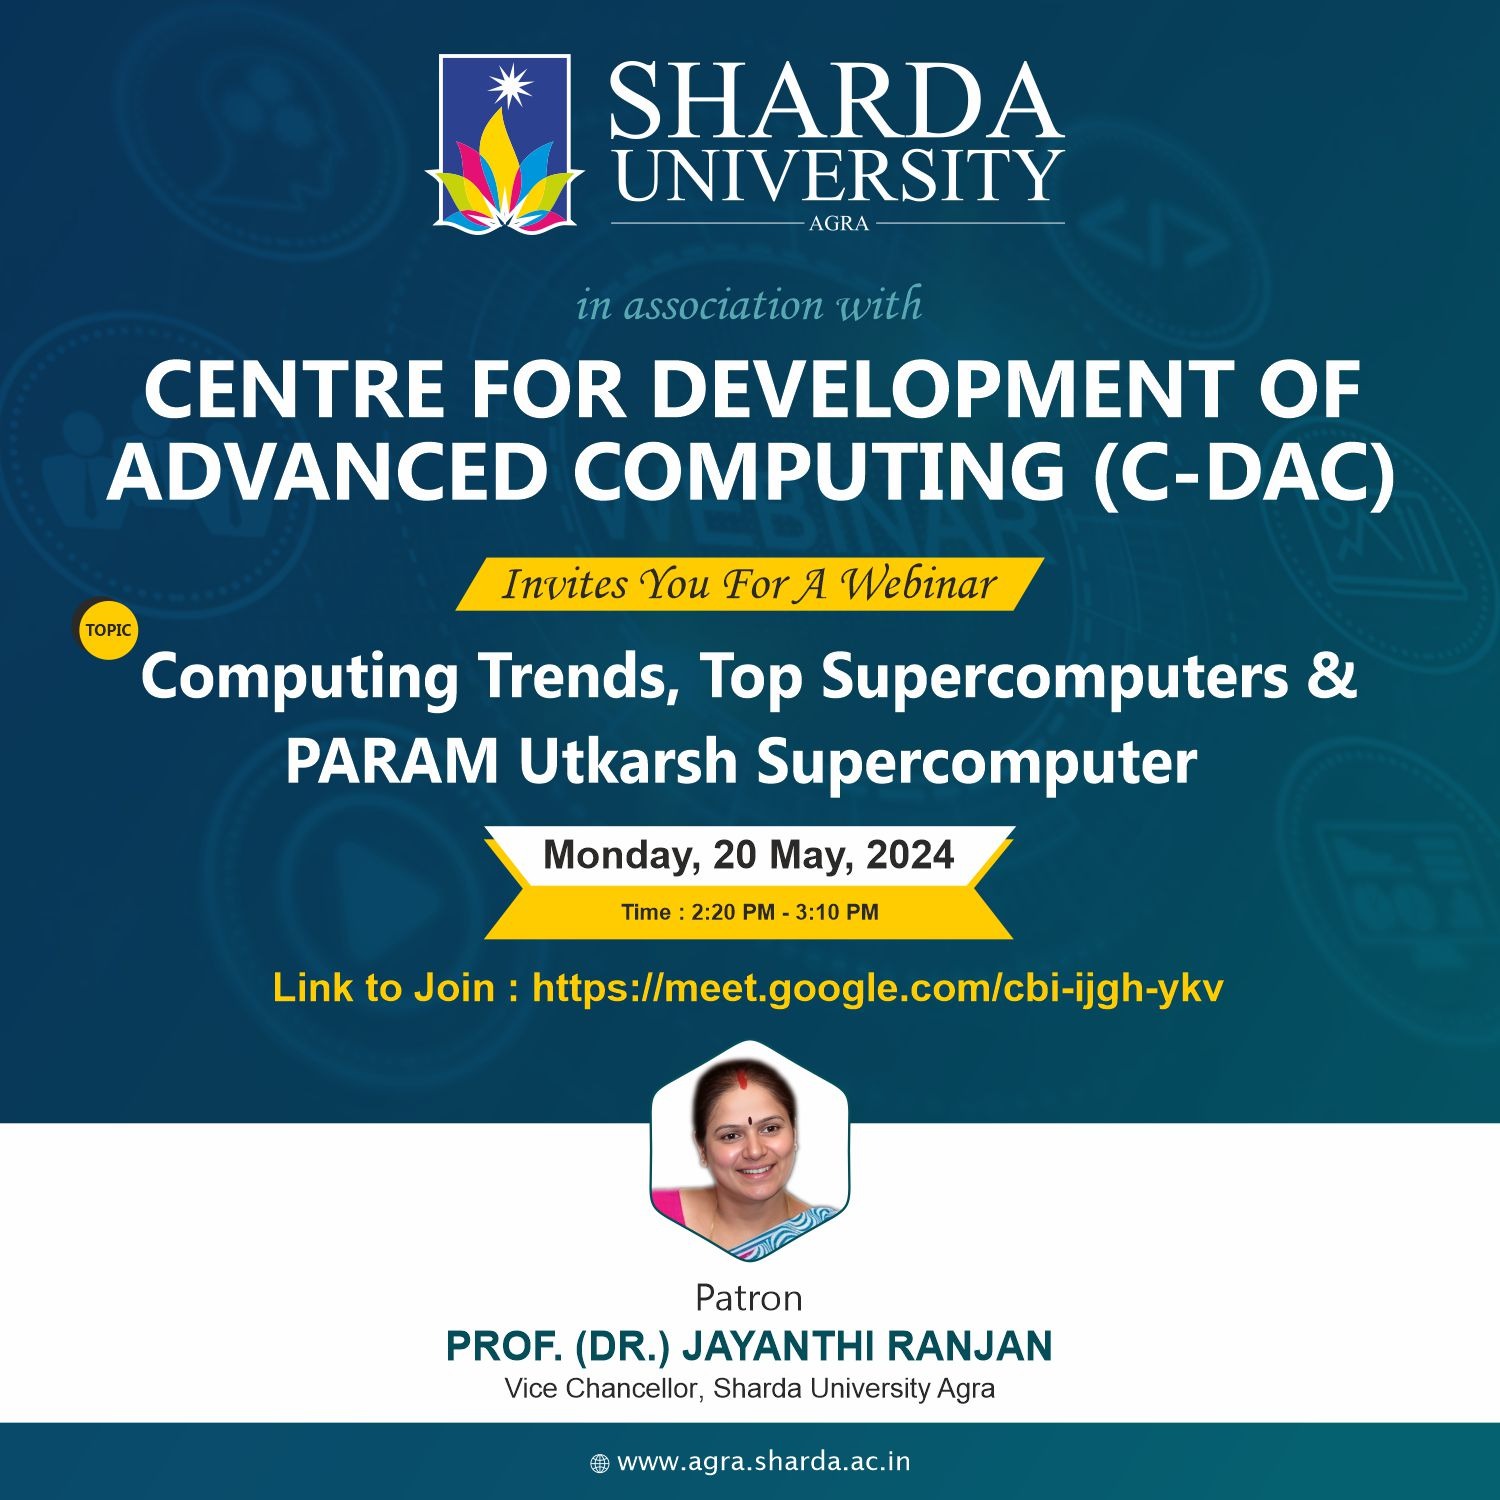 A Webinar on Computing Trends, Top Supercomputers & PARAM Utkarsh Supercomputer